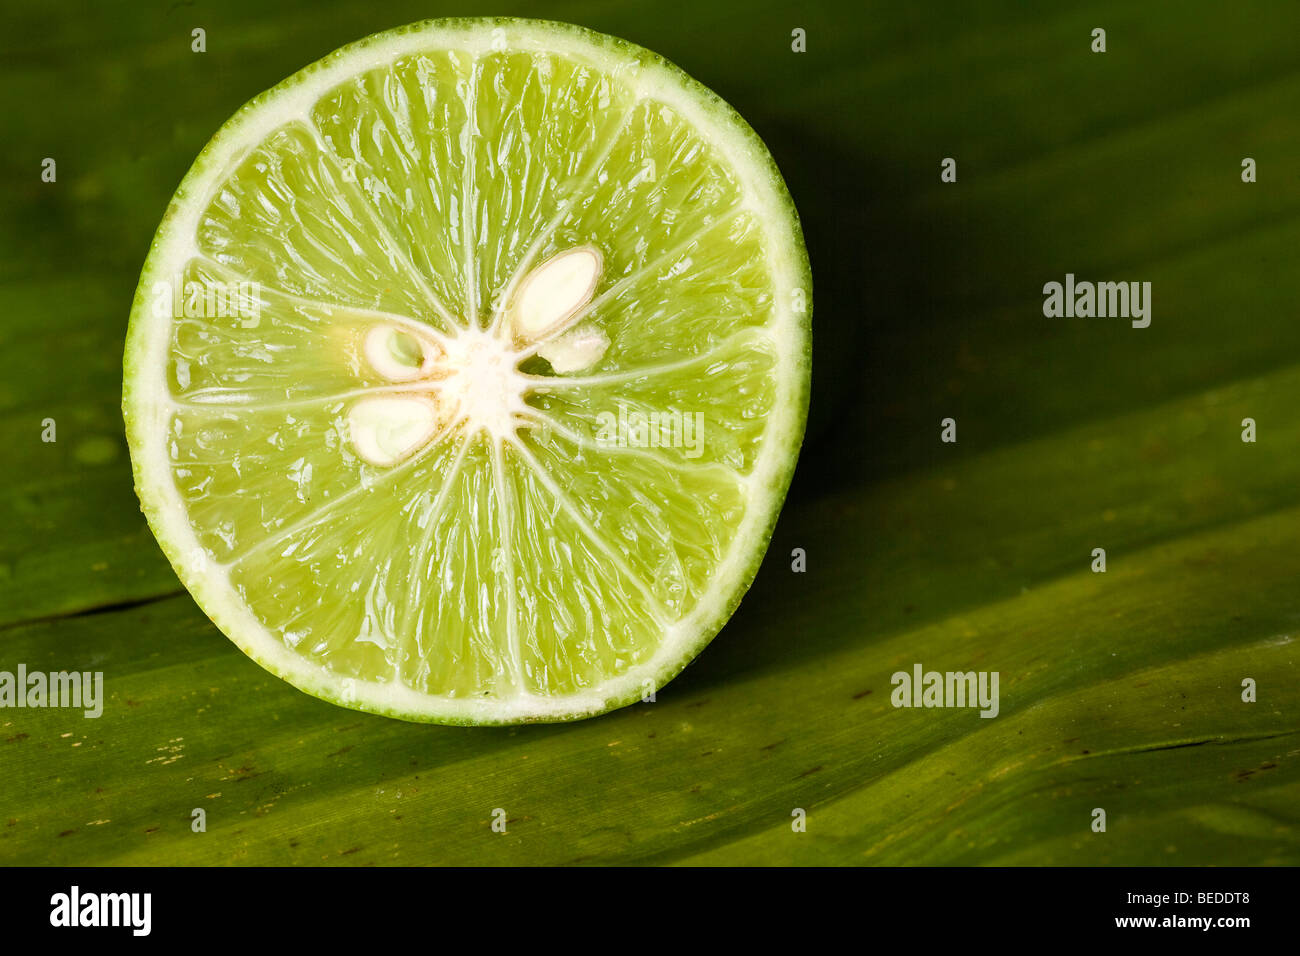 Cut lime on a banana leaf Stock Photo